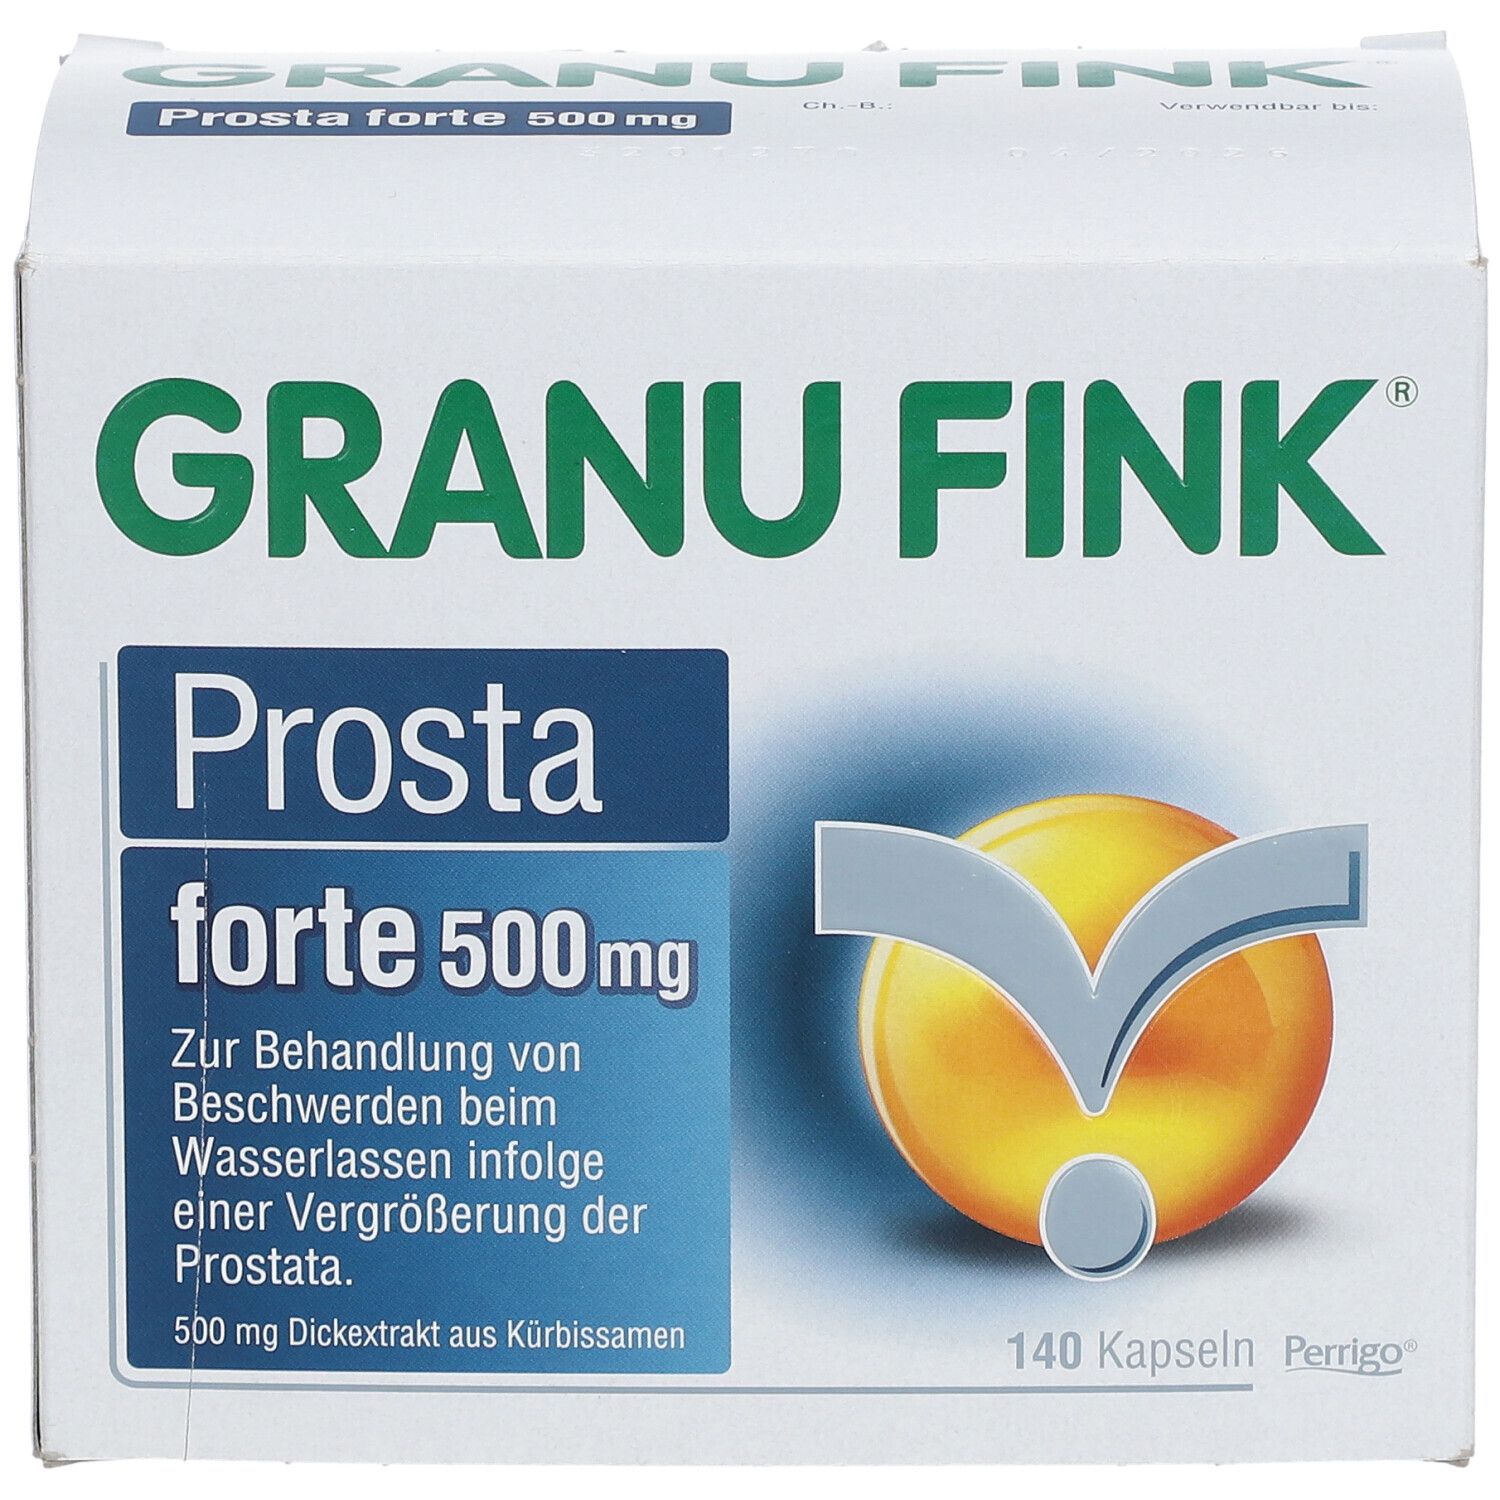 GRANU FINK® Prosta forte 500 mg